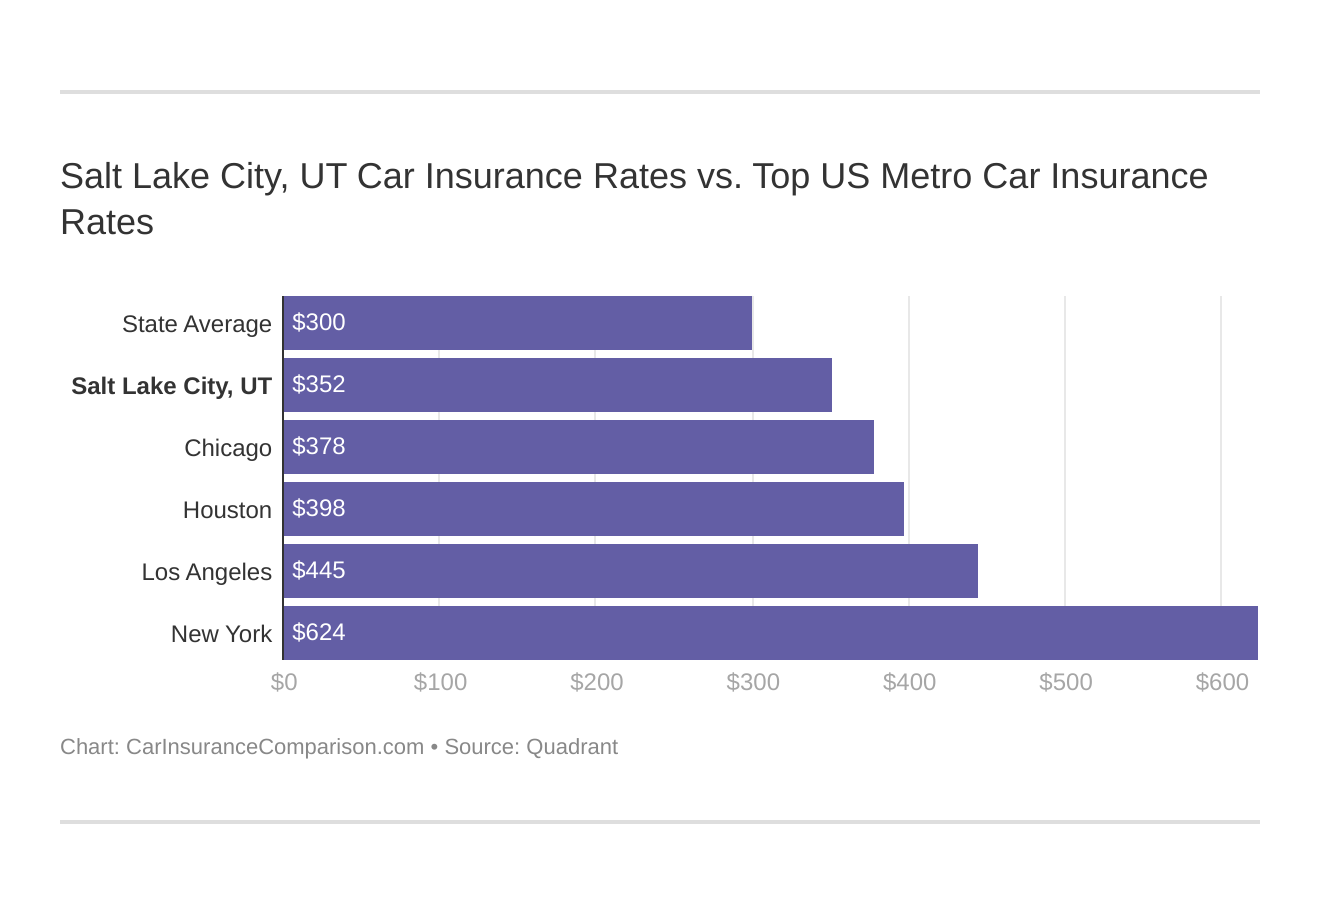 Salt Lake City, UT Car Insurance Rates vs. Top US Metro Car Insurance Rates